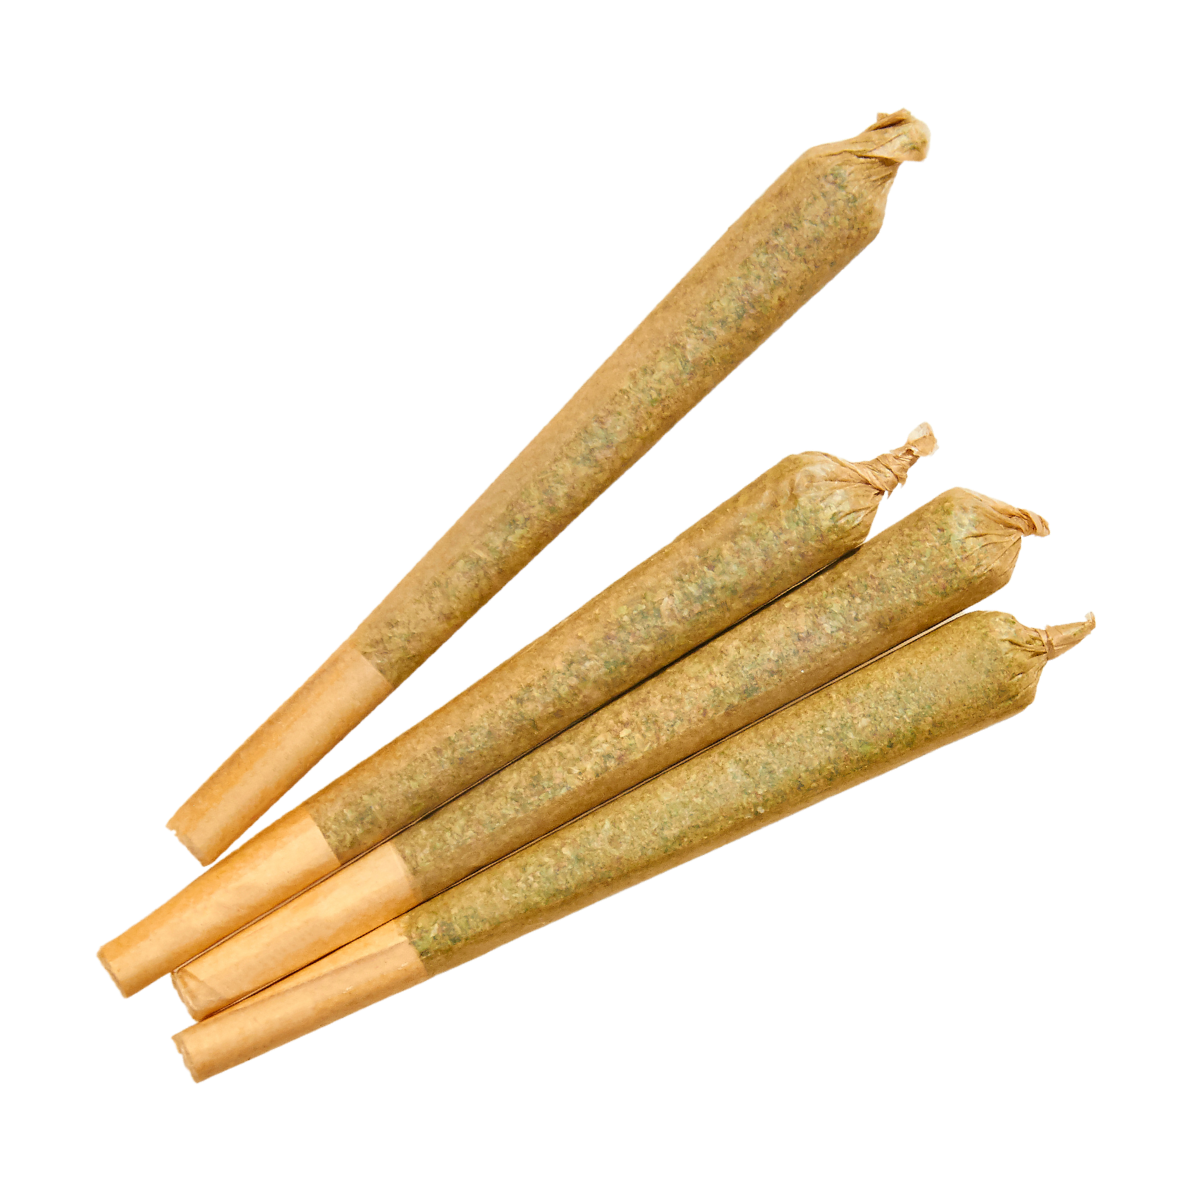 Prerolled marijuana joints